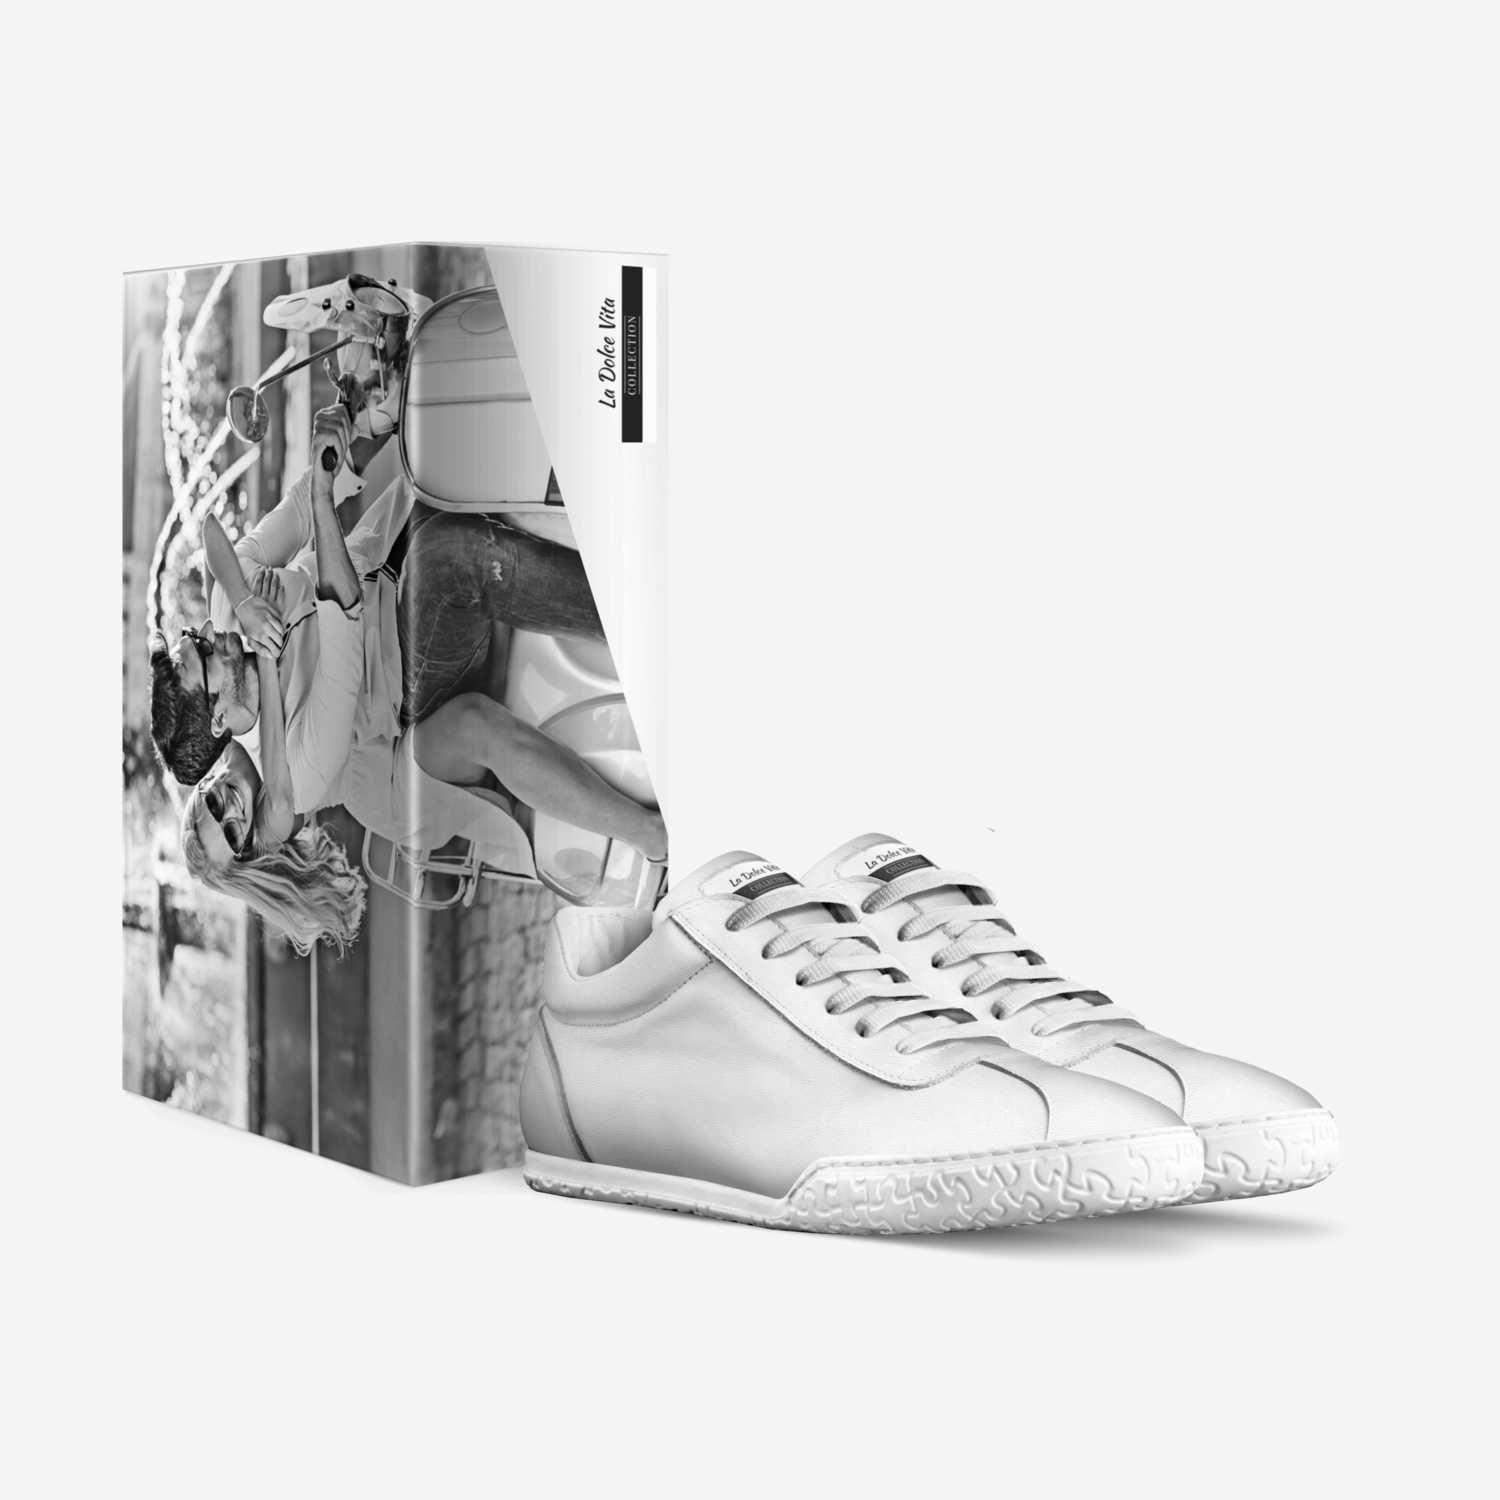 La Dolce Vita custom made in Italy shoes by Ldv Ldv | Box view